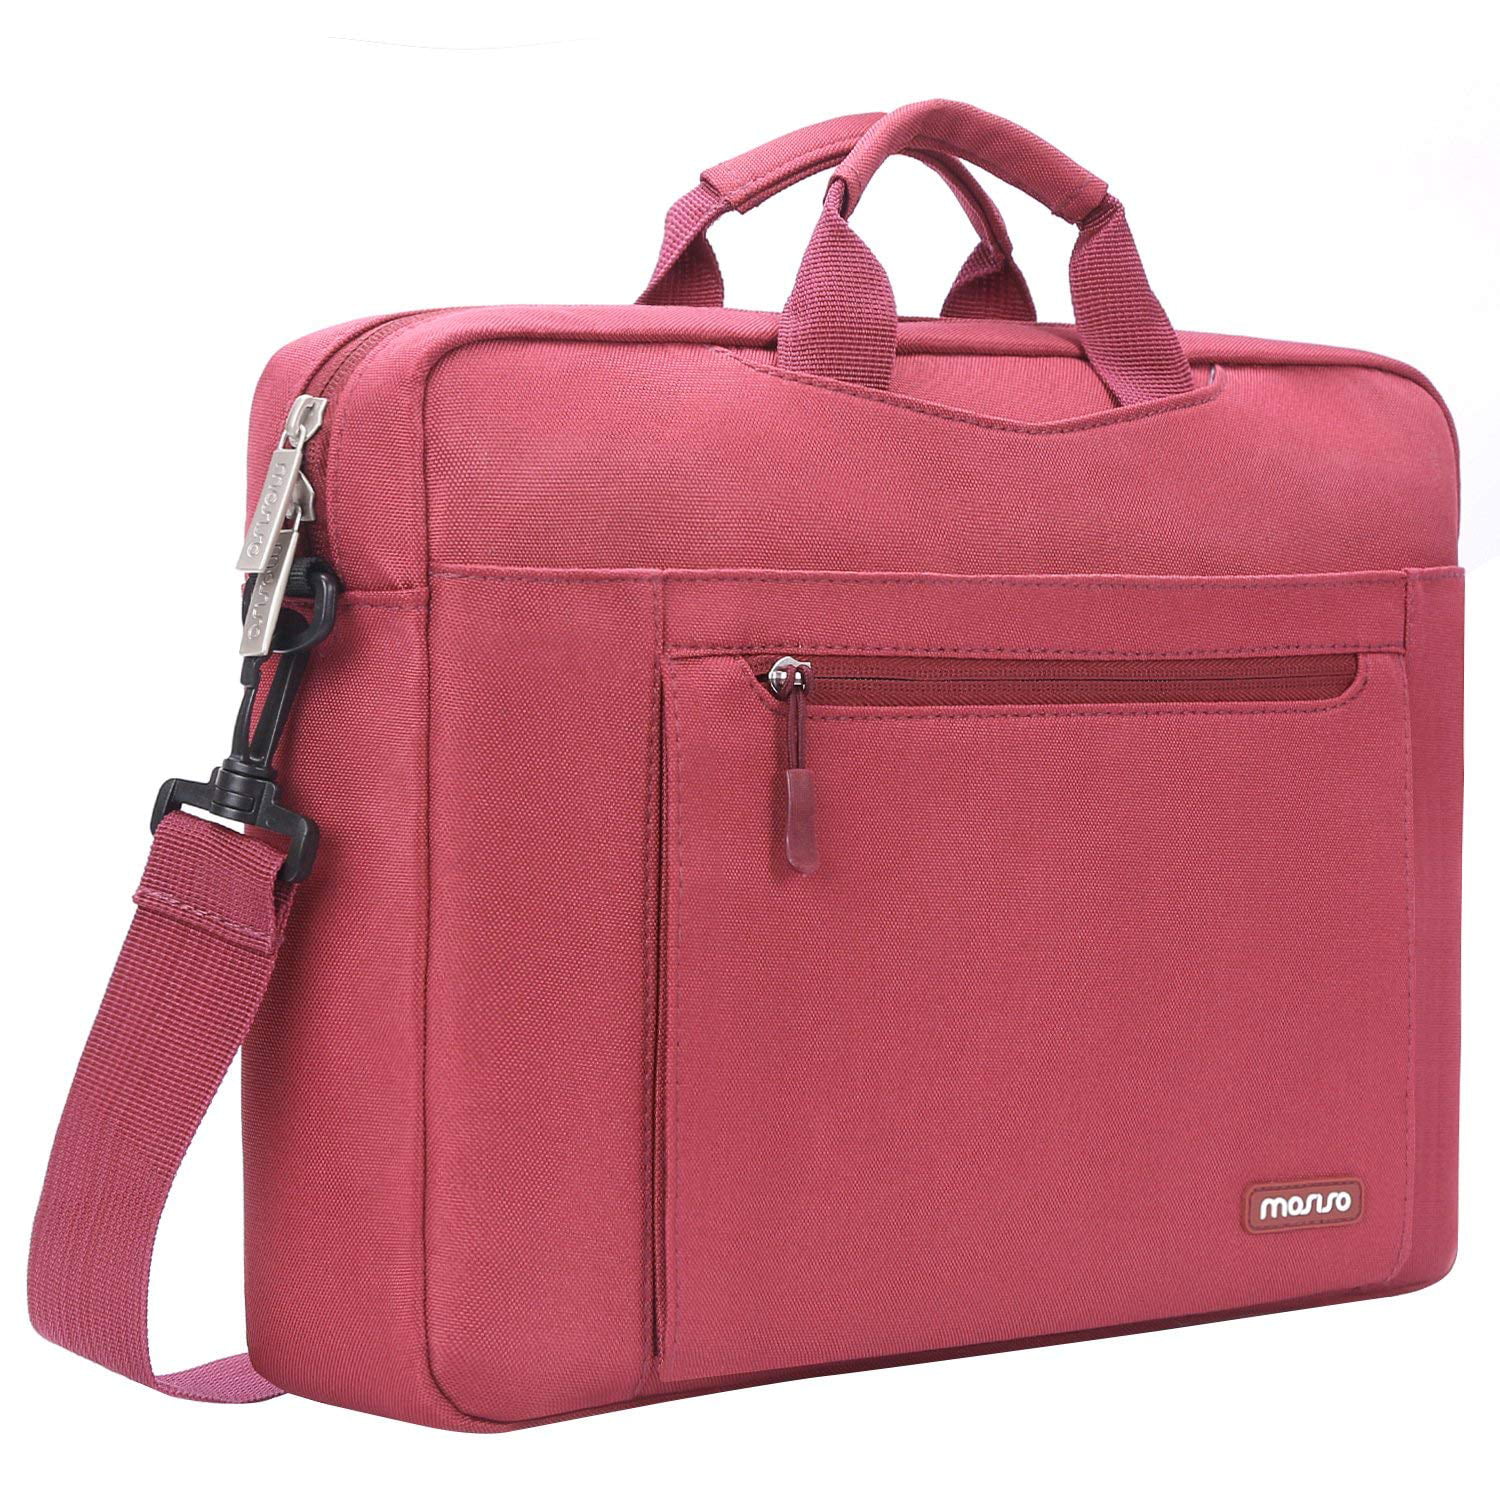 Mosiso Laptop Shoulder Bag for 1313.3 Inch MacBook Pro, MacBook Air